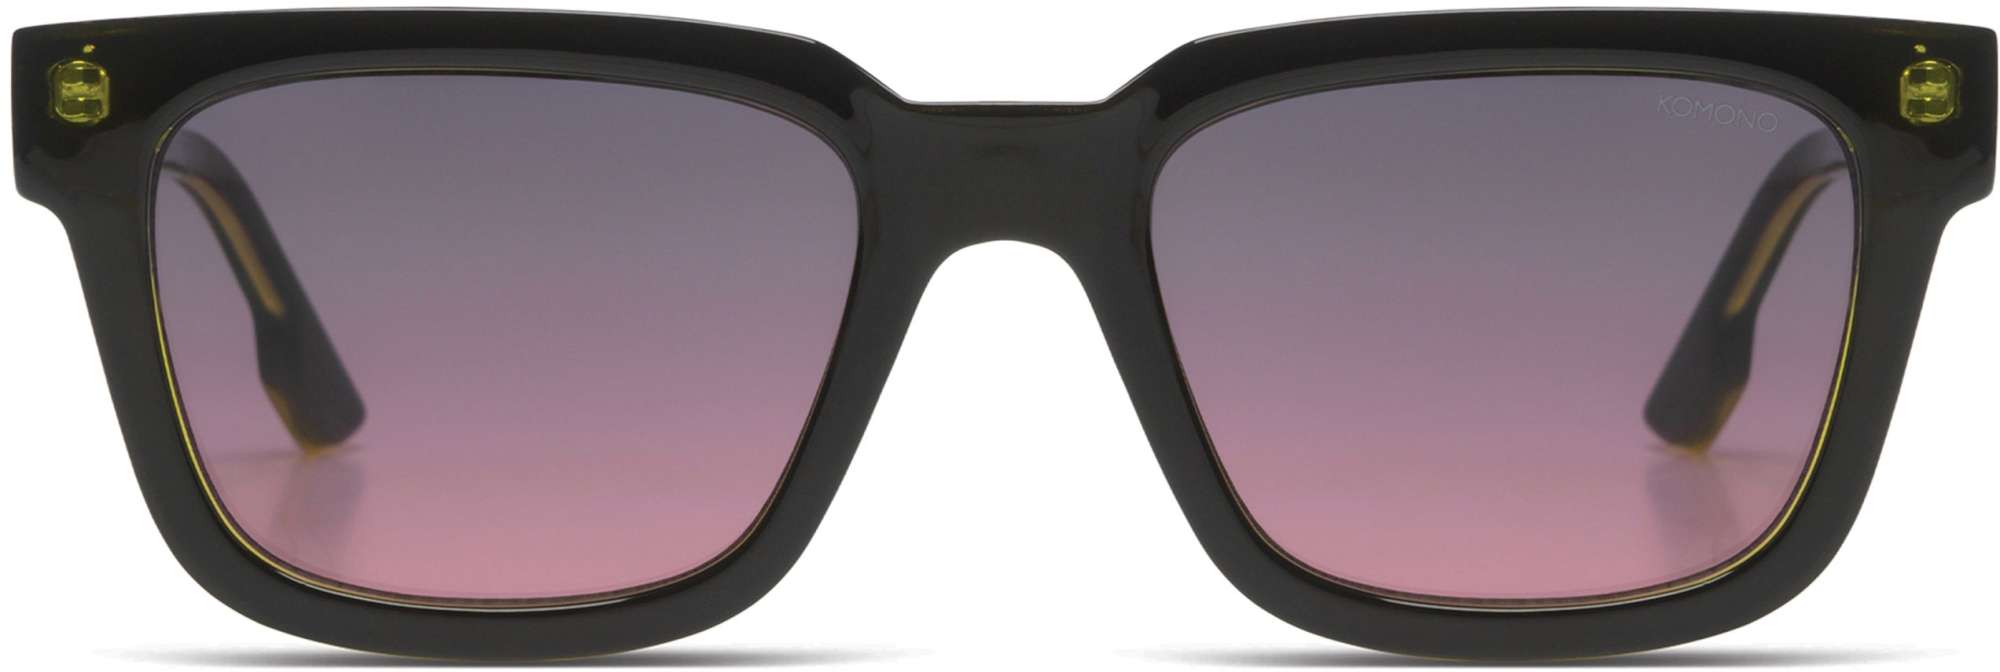 Afbeelding van Komono Bobby matrix sunglasses